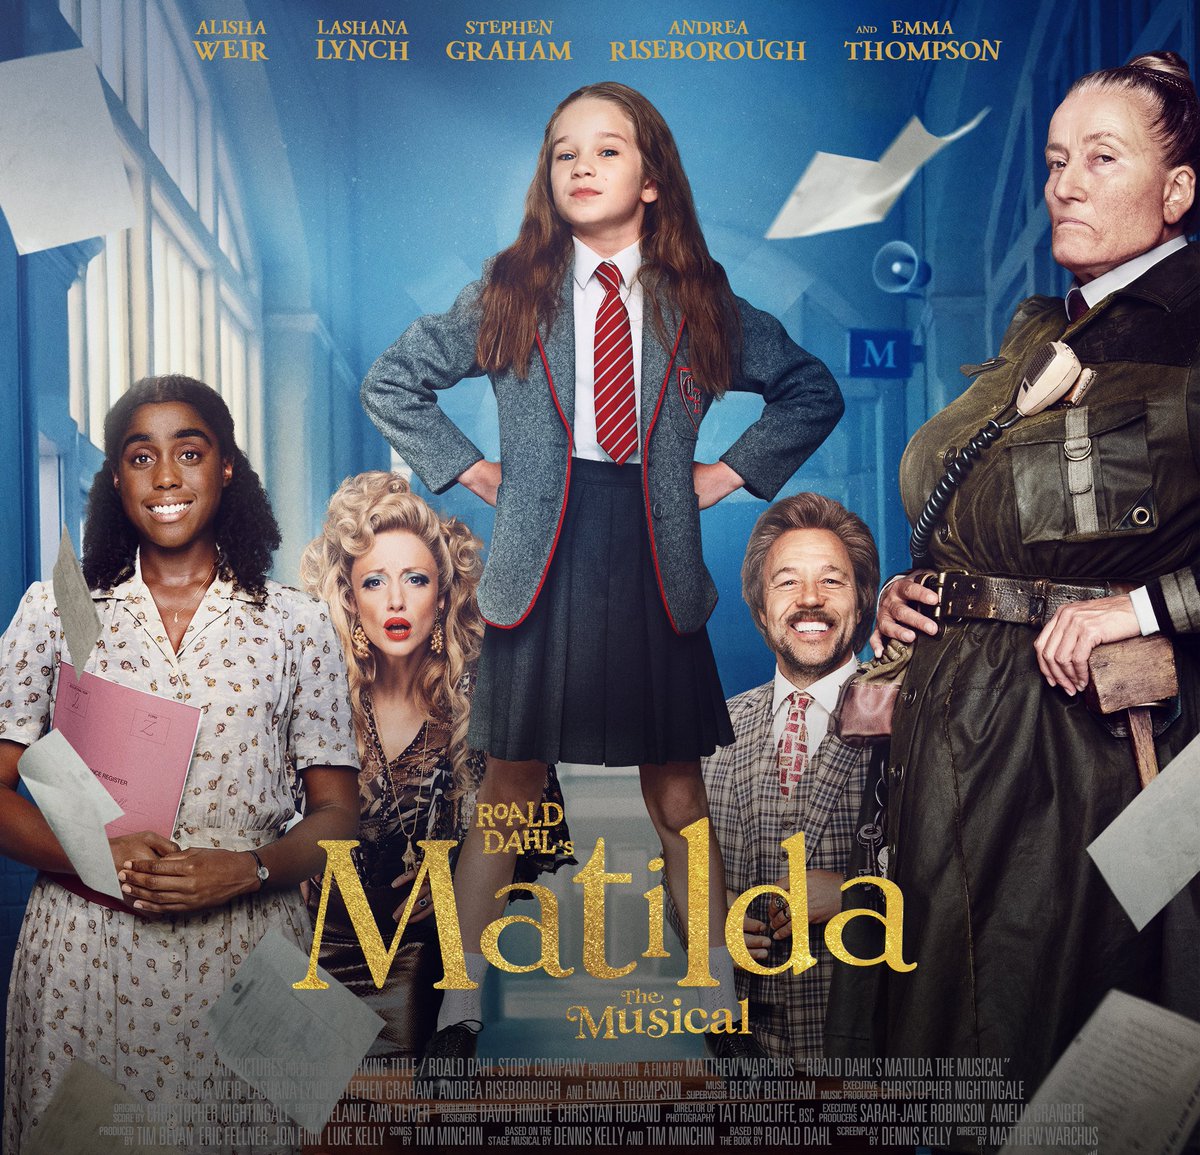 From this Sunday, you can watch this very excellent Matthew Warchus movie on Netflix UK/IE. #matildathemusicalmovie #MatildaMovie